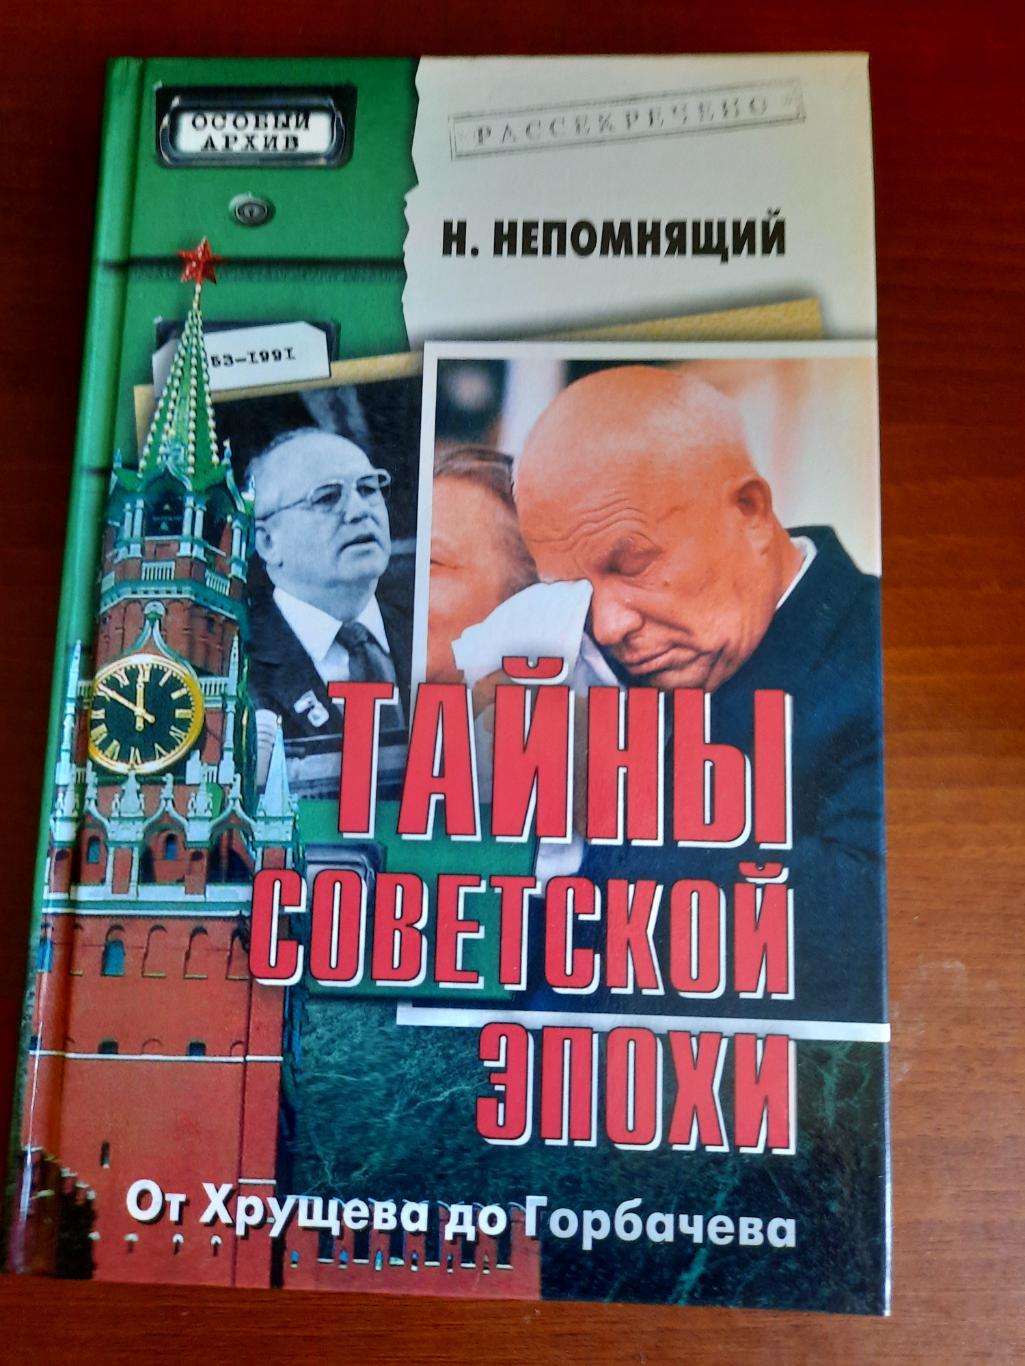 Тайны советский эпохи. От Хрущева до Горбачева